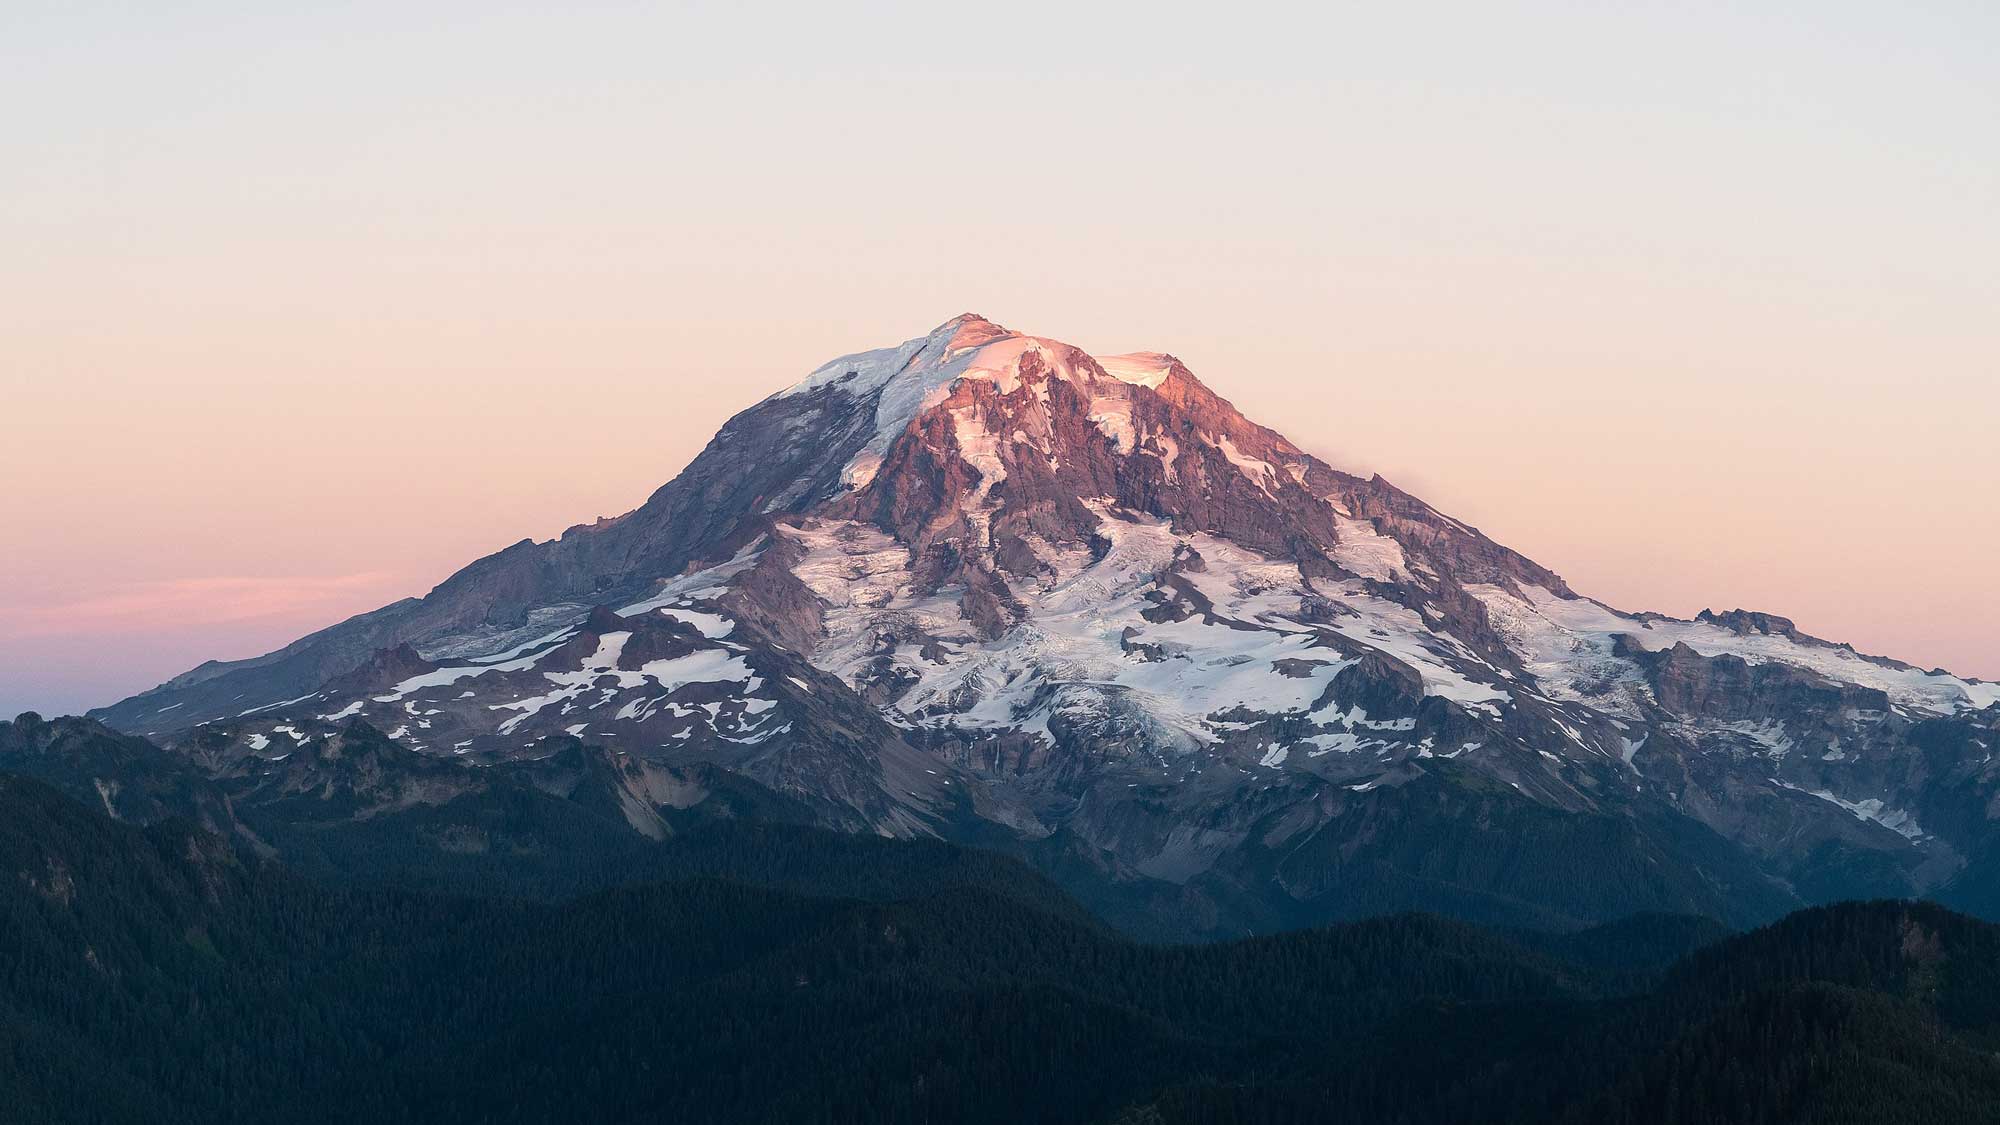 Photograph of Mount Rainier.